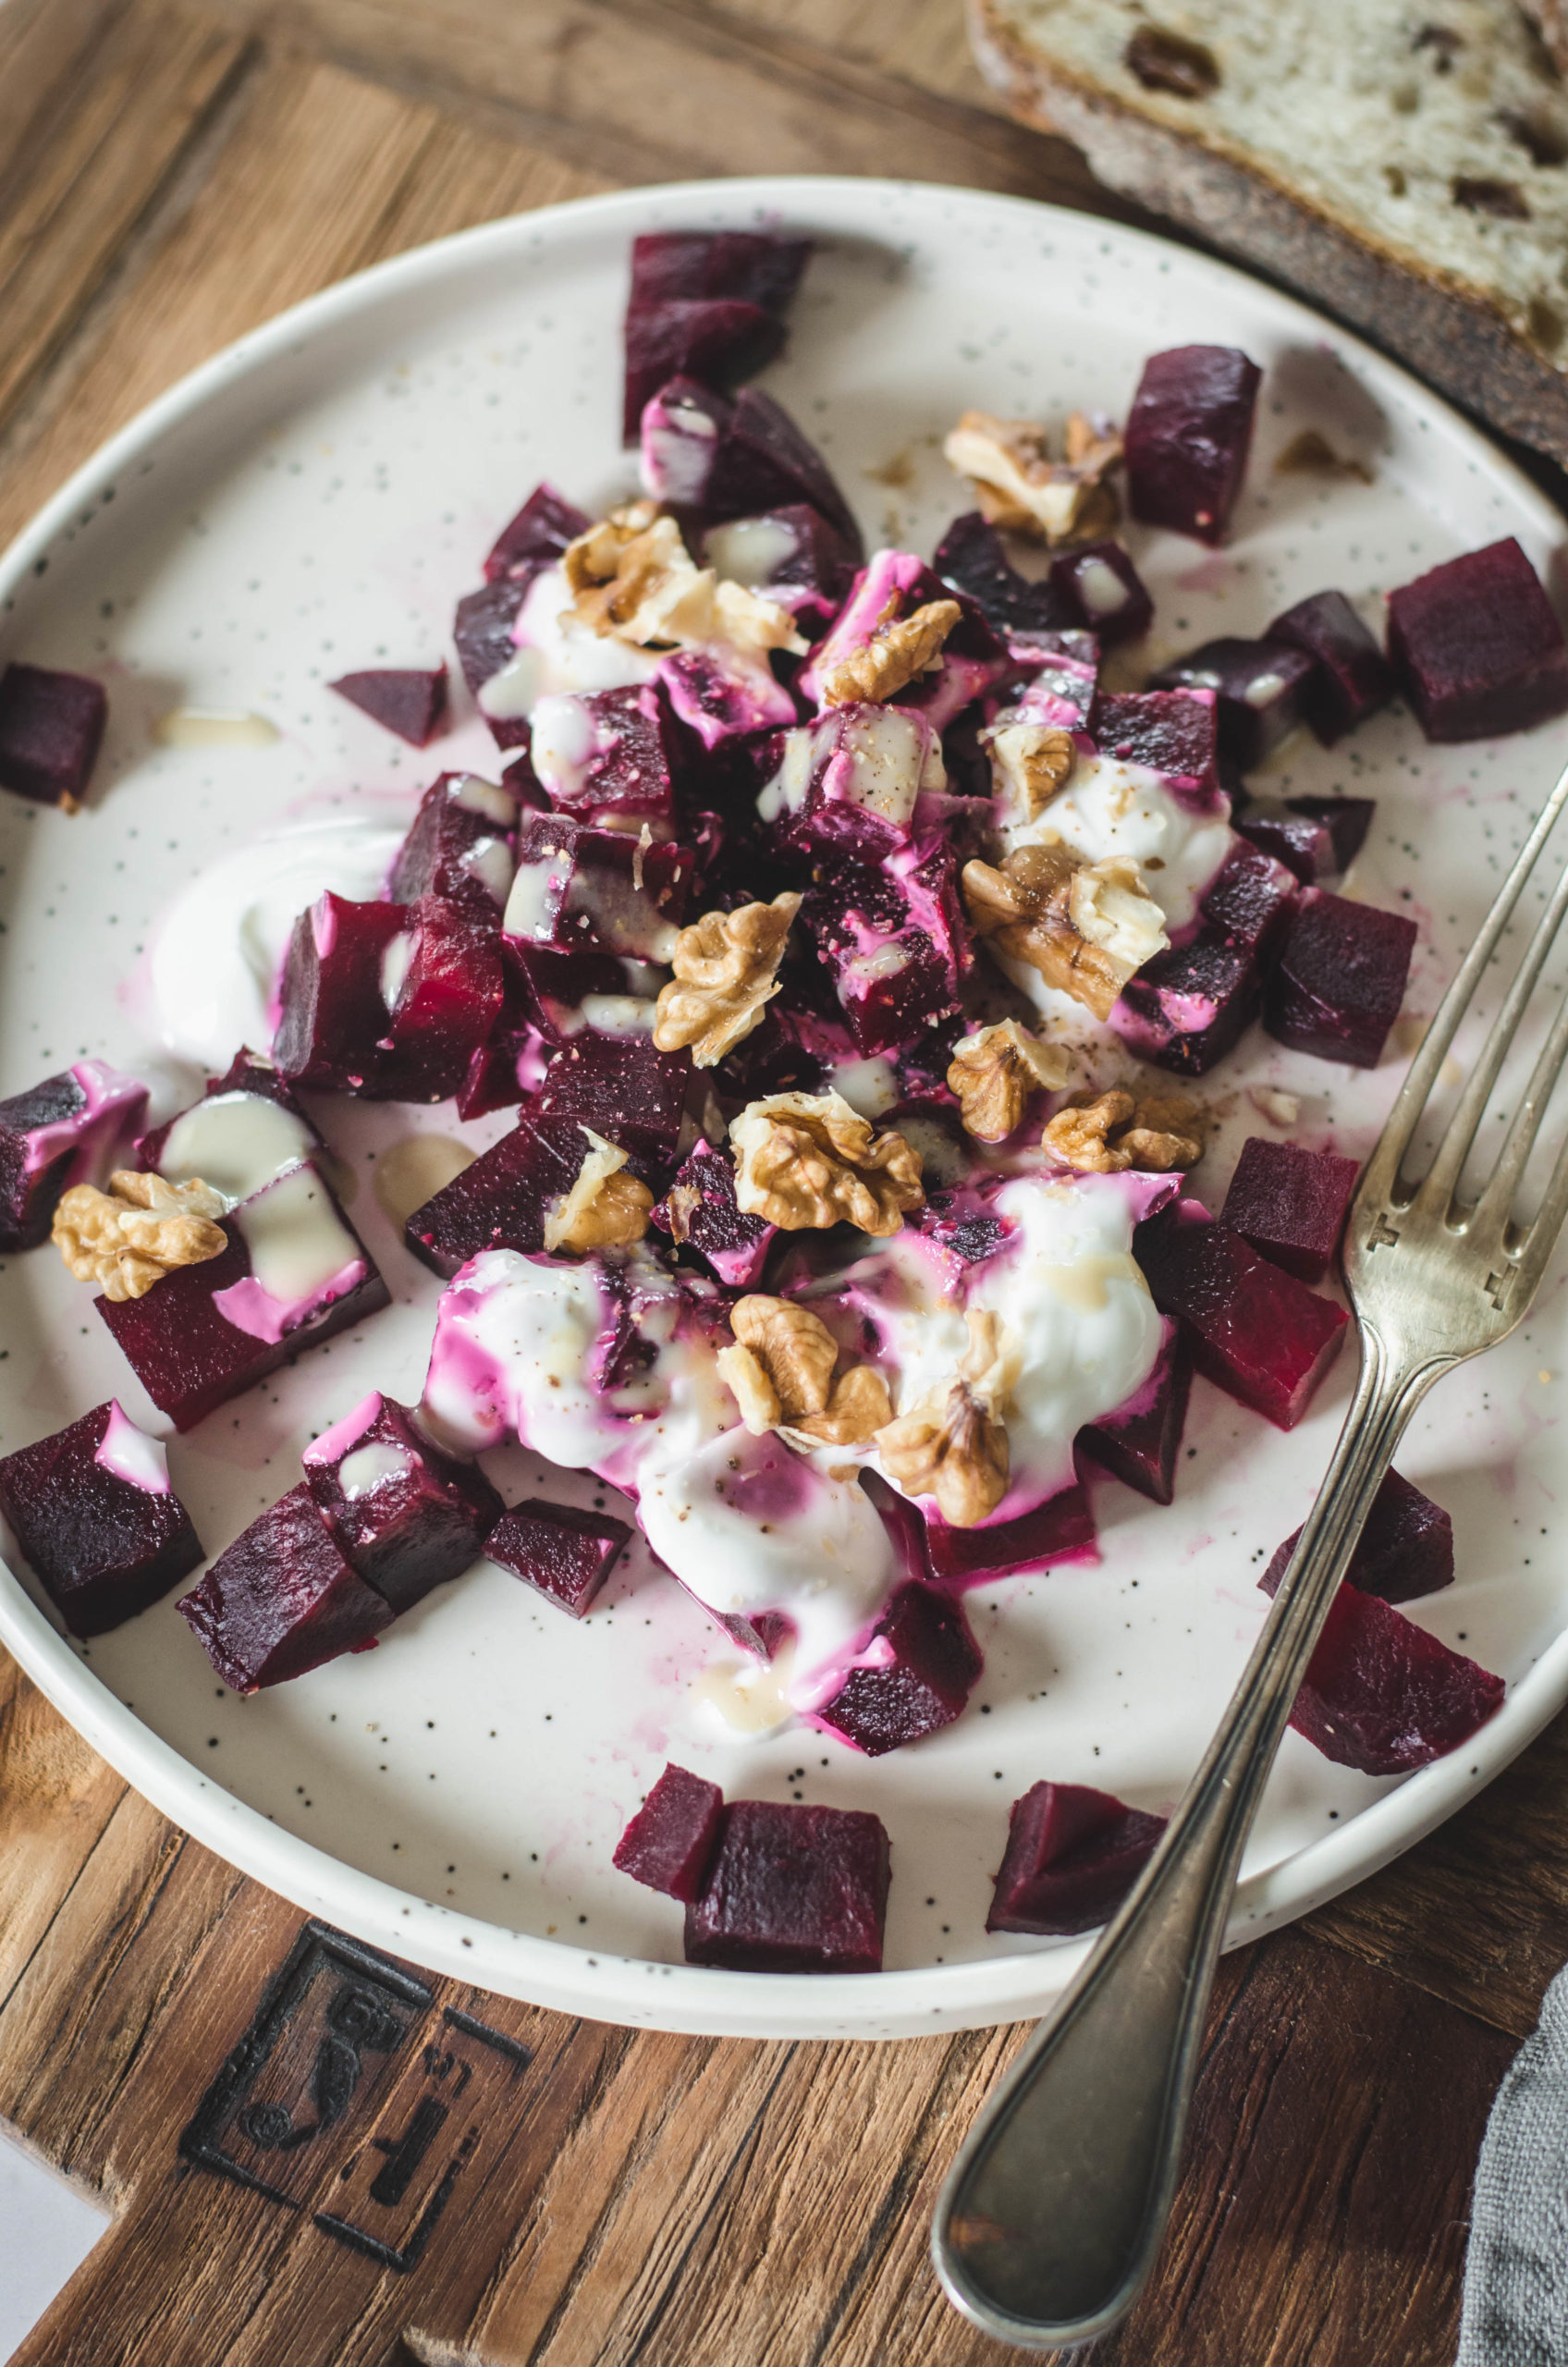 Beetroot and Yogurt Salad with Walnut recipe